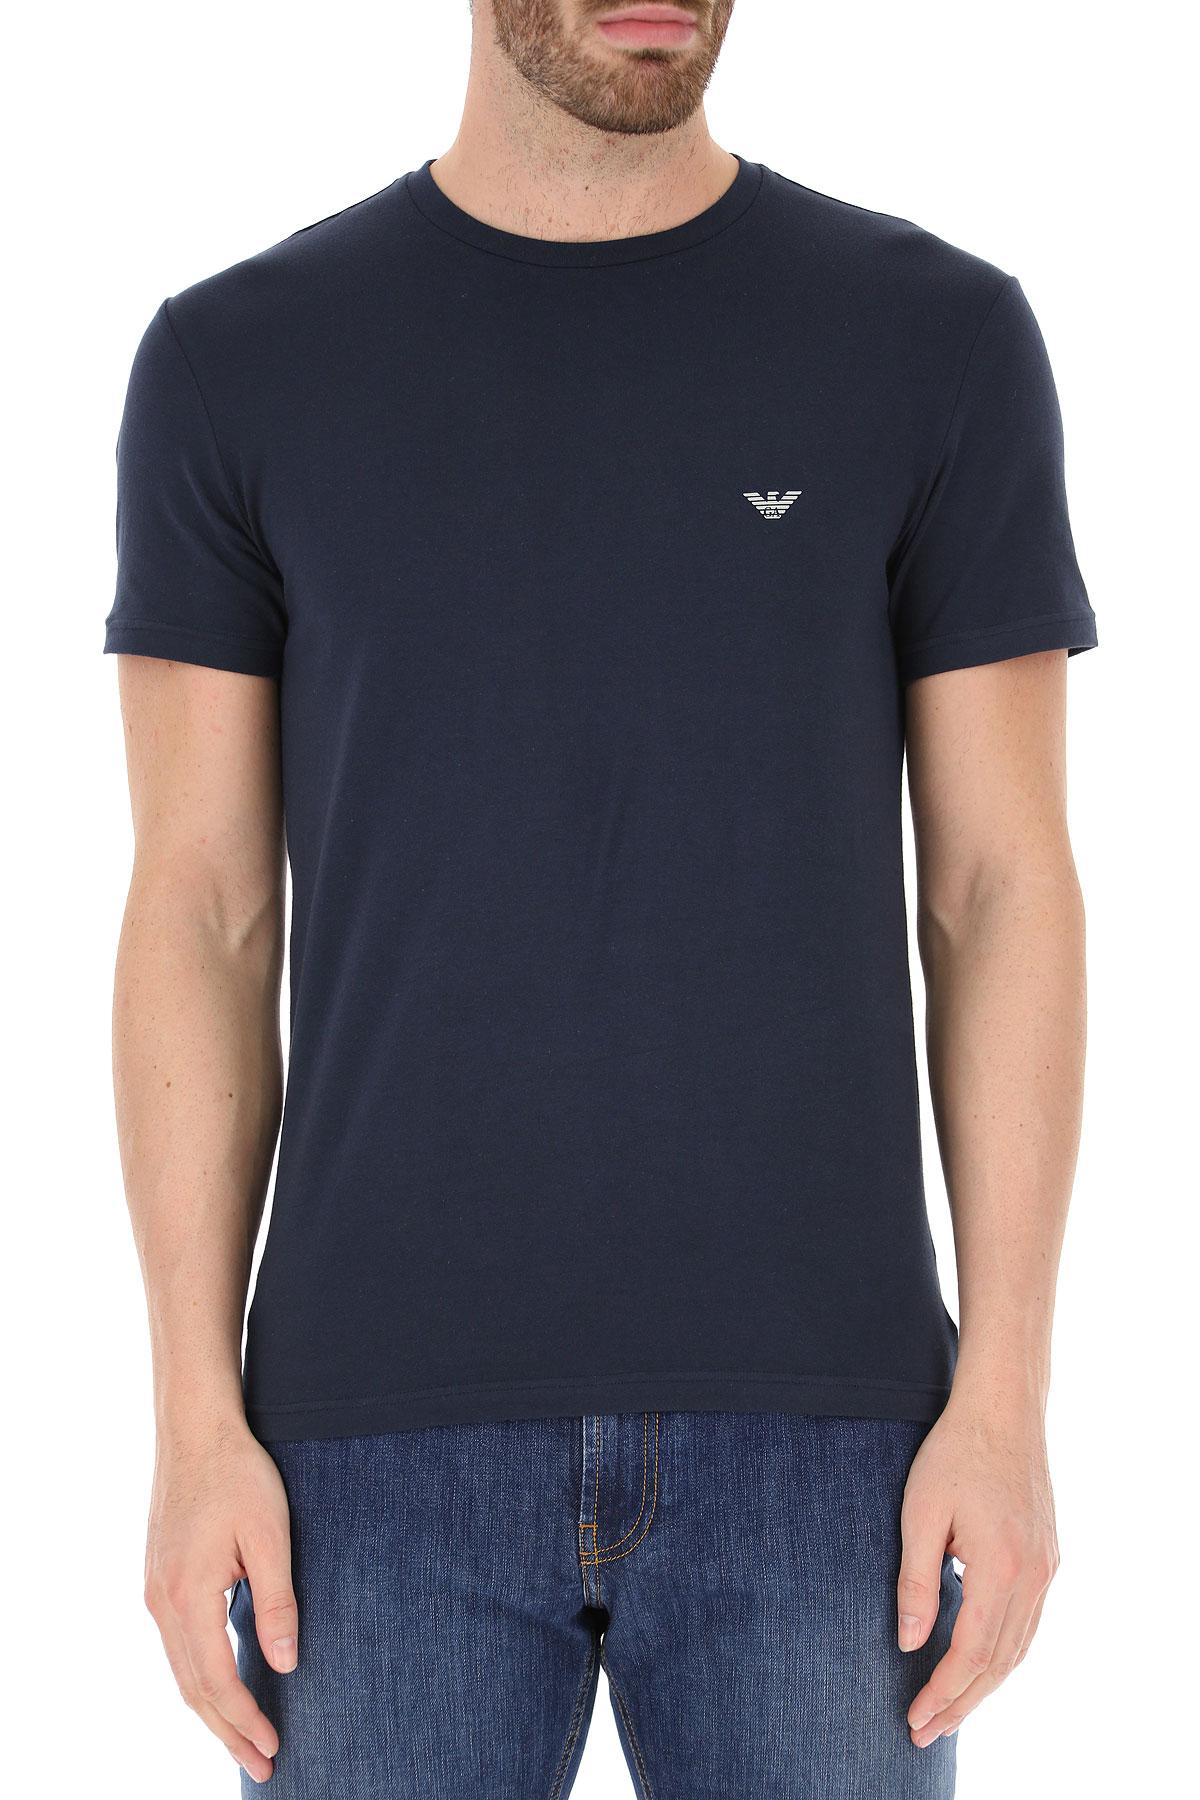 Emporio Armani Cotton T-shirt For Men in Blue Marine (Blue) for Men - Lyst